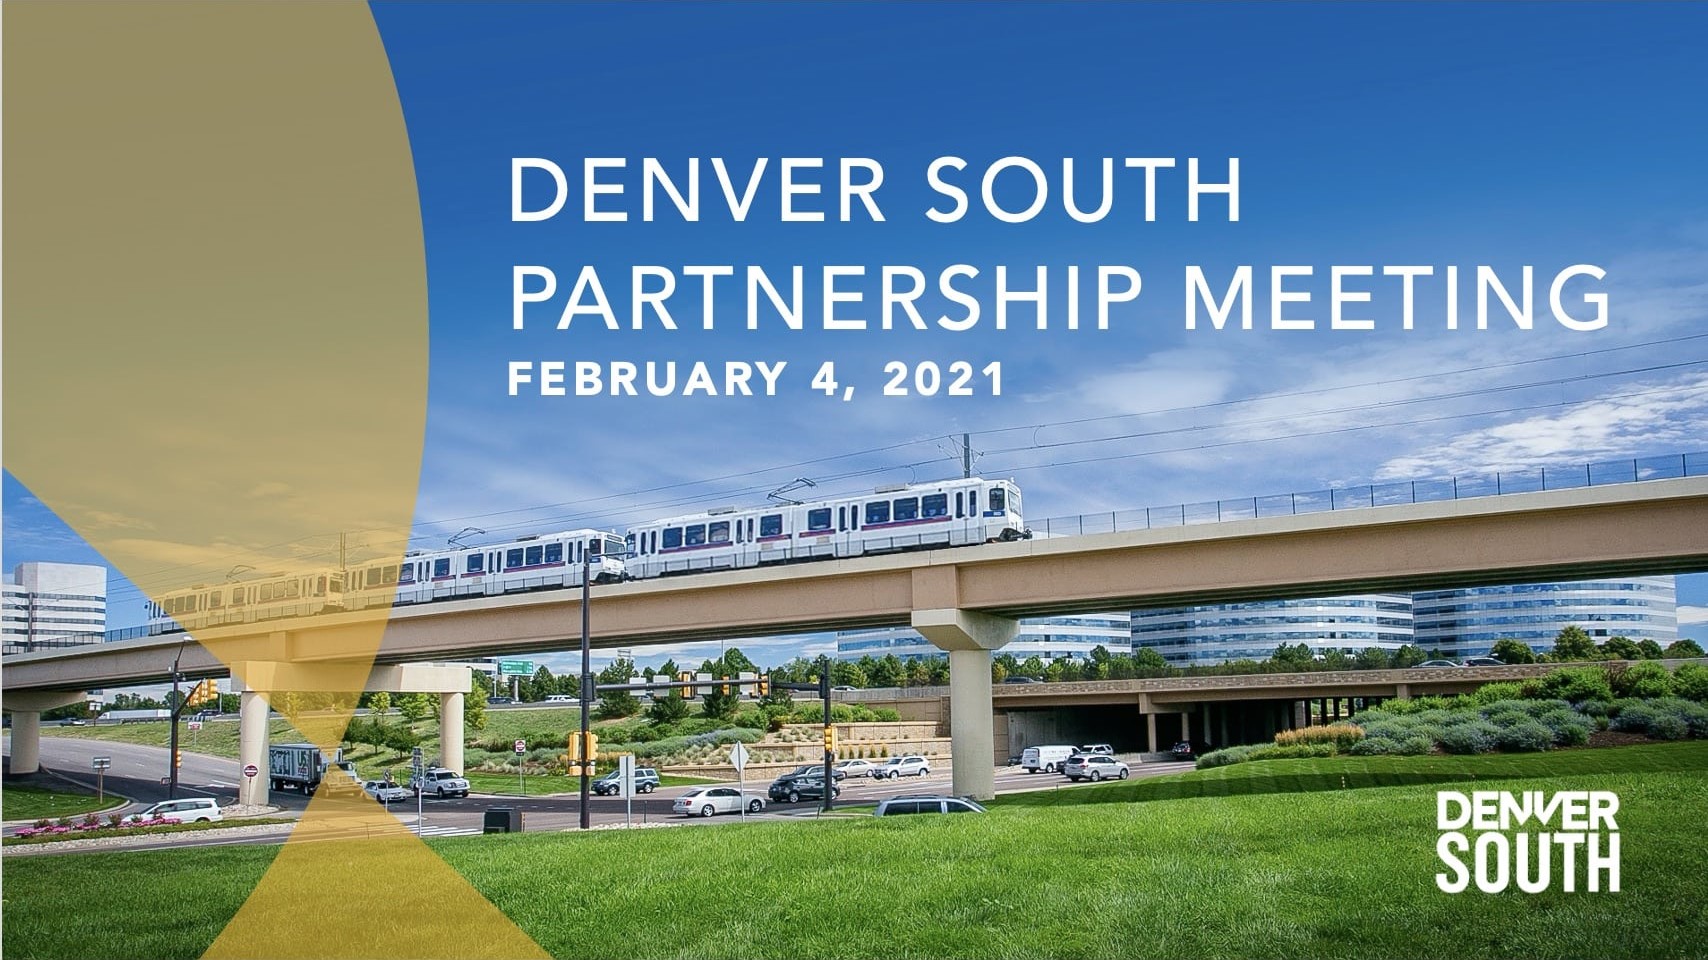 Denver South Partnership Meeting